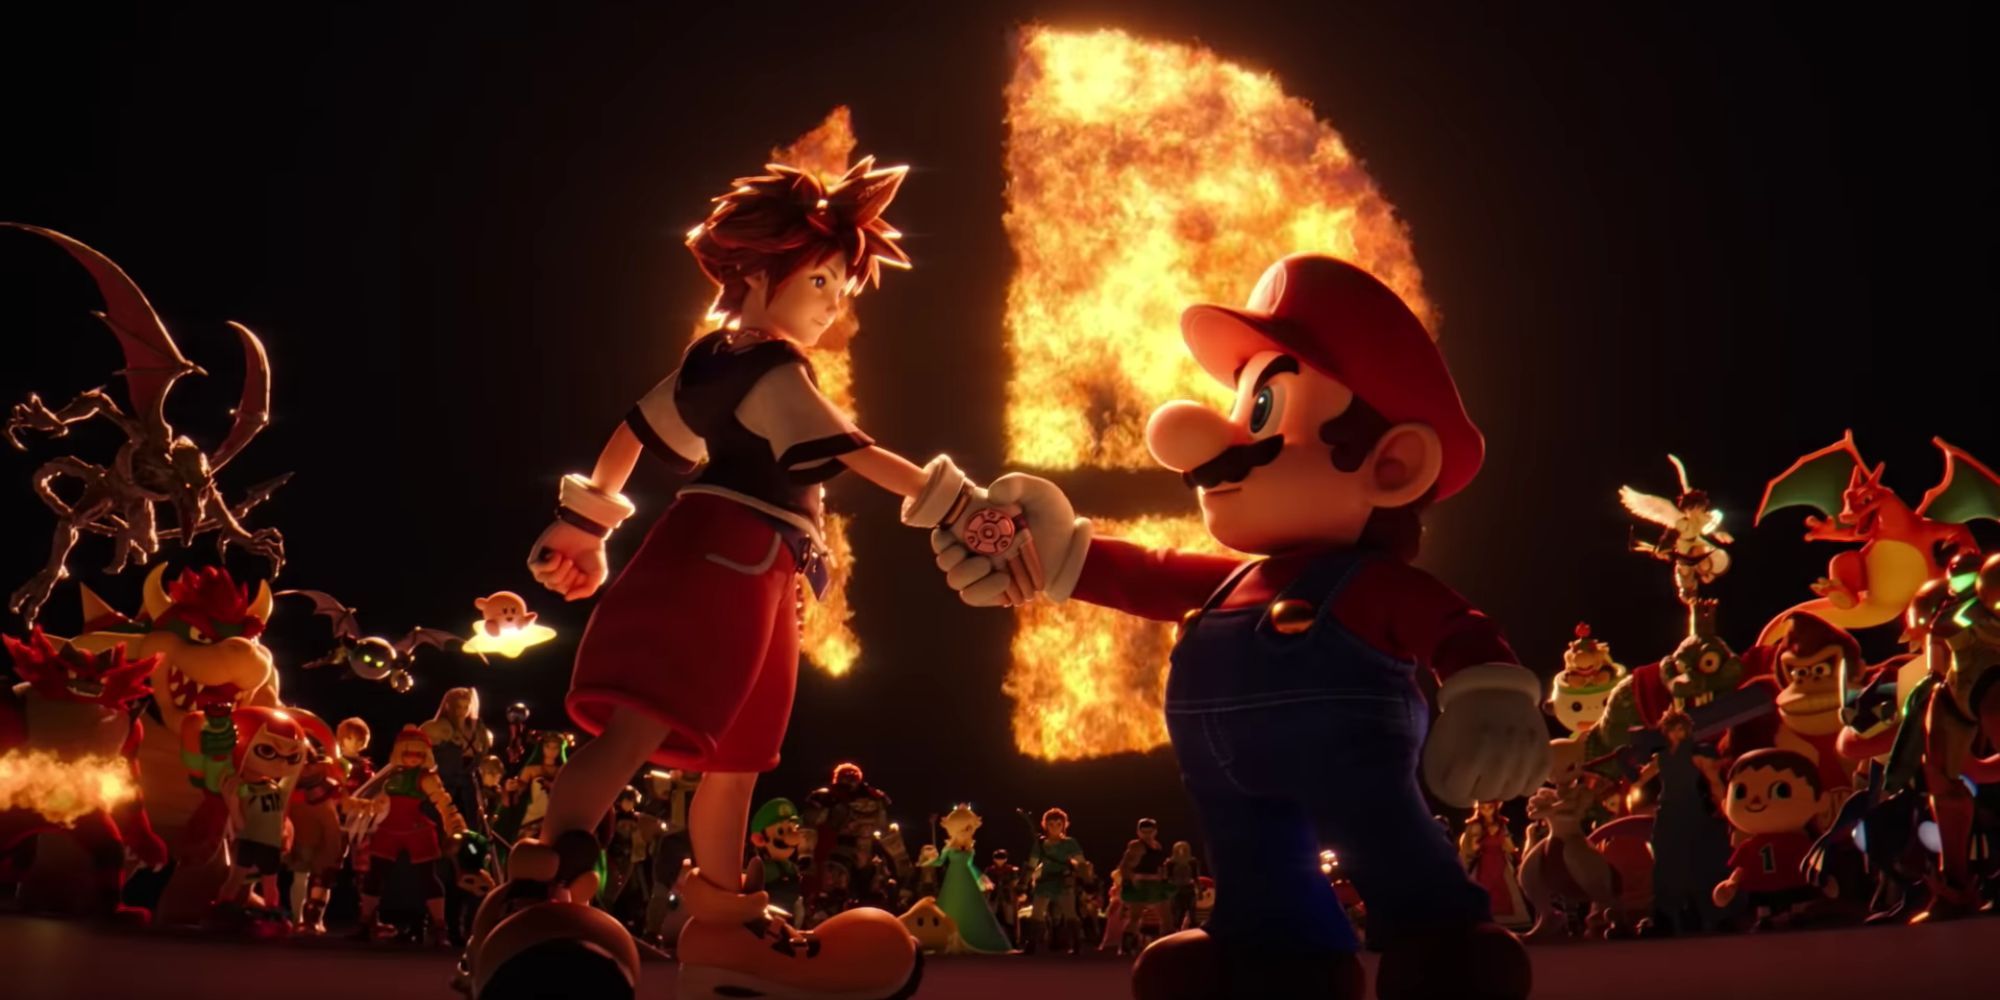 Sora shaking Mario's hand in front of the Super Smash Bros. logo.